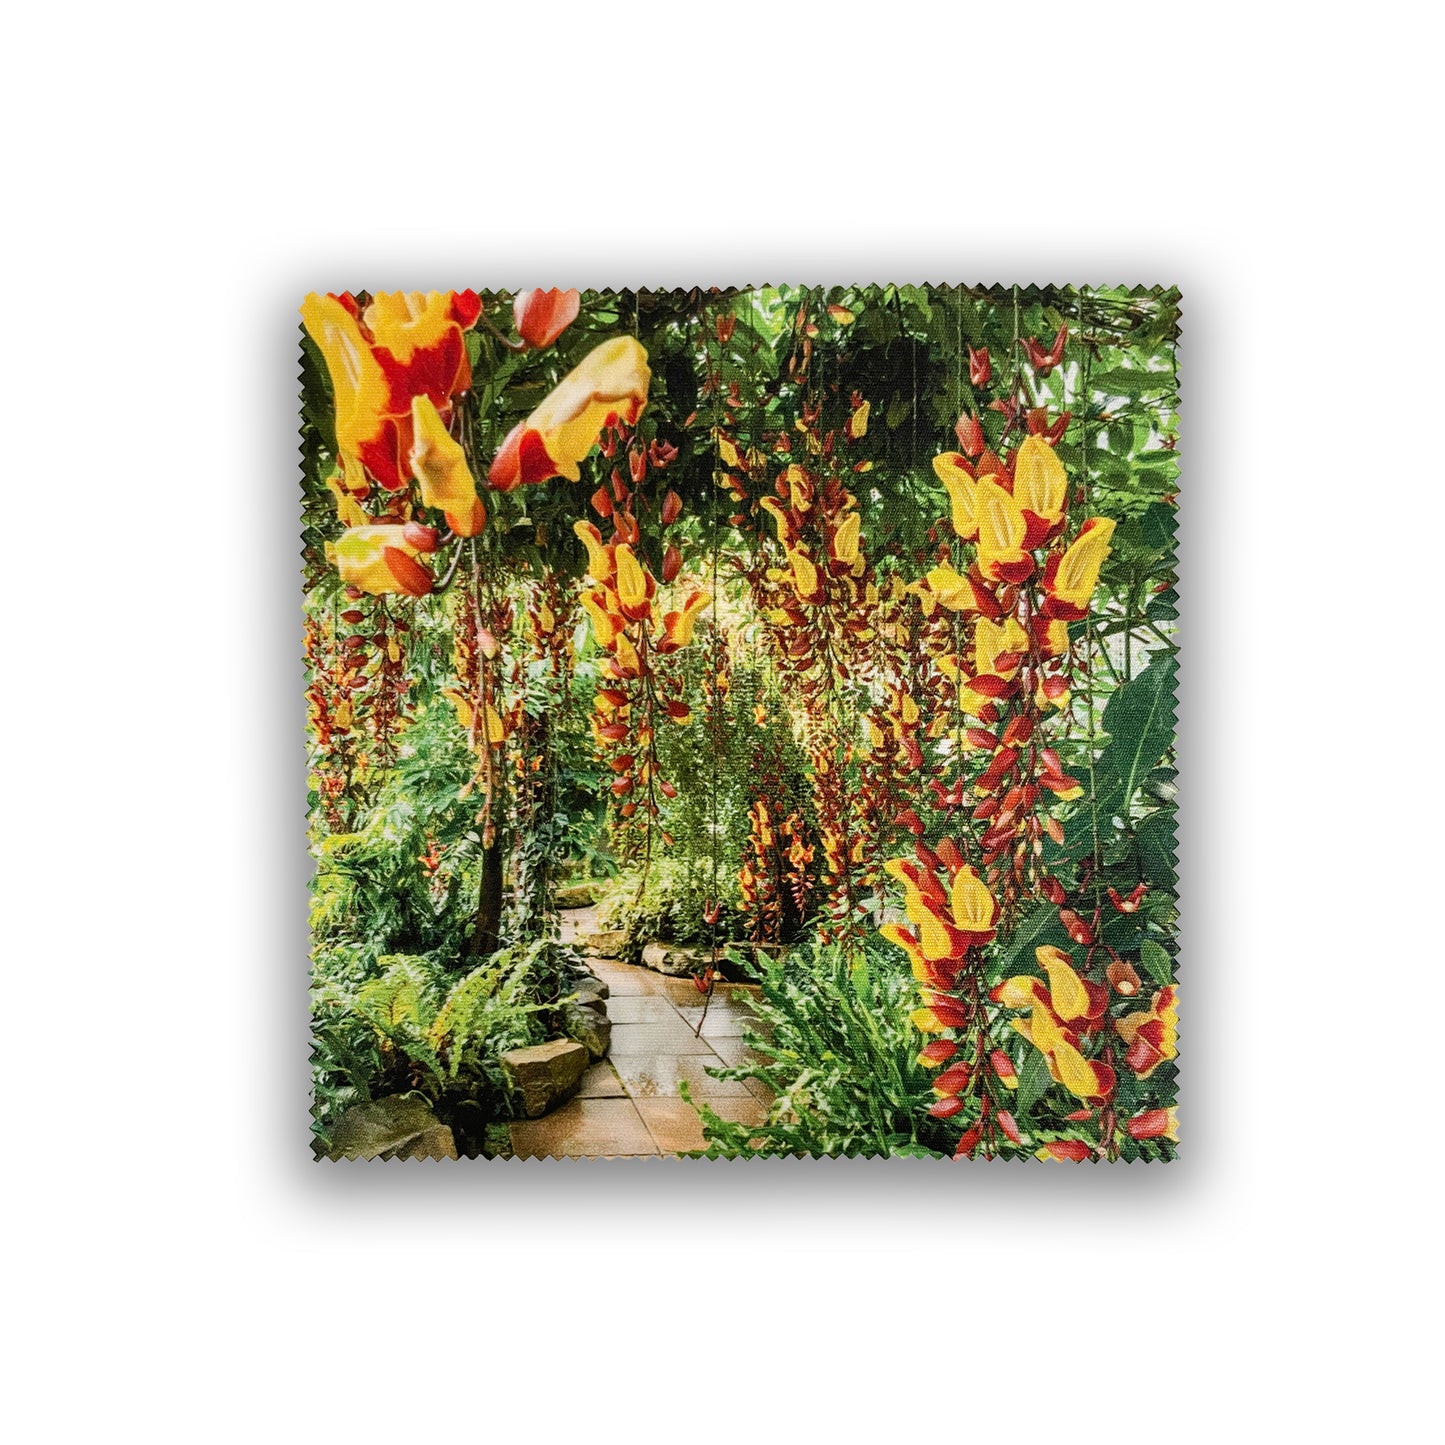 Lens cloth featuring Botanic Garden photography